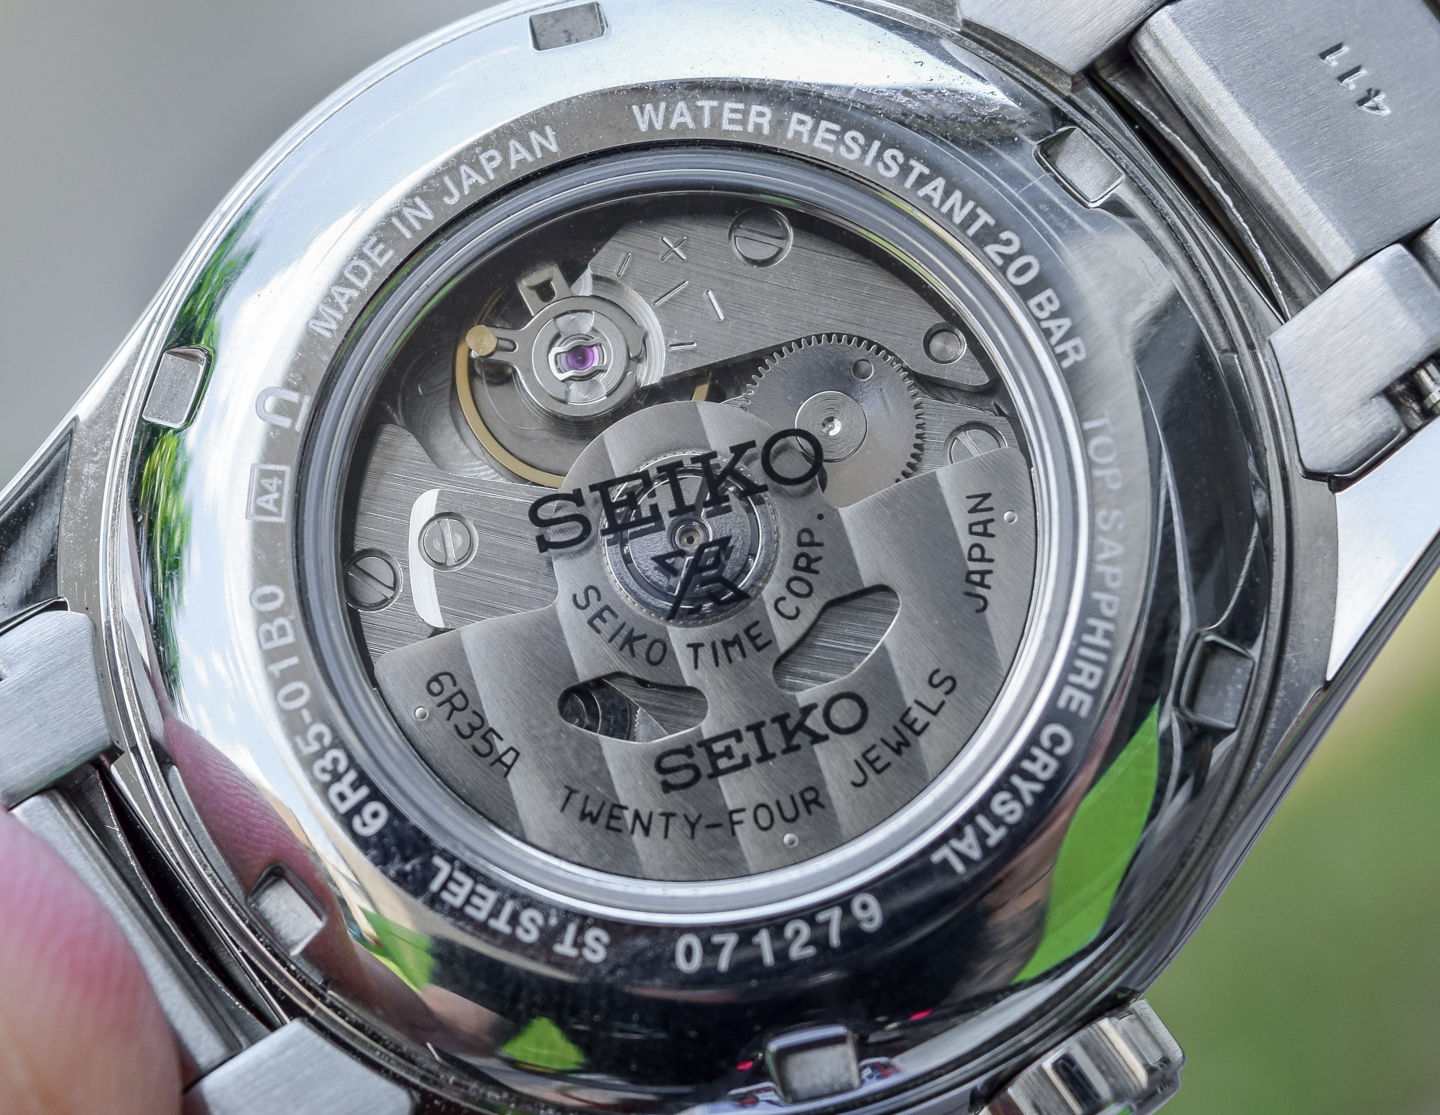 Seiko Alpinist SPB159 Review - Watch Clicker